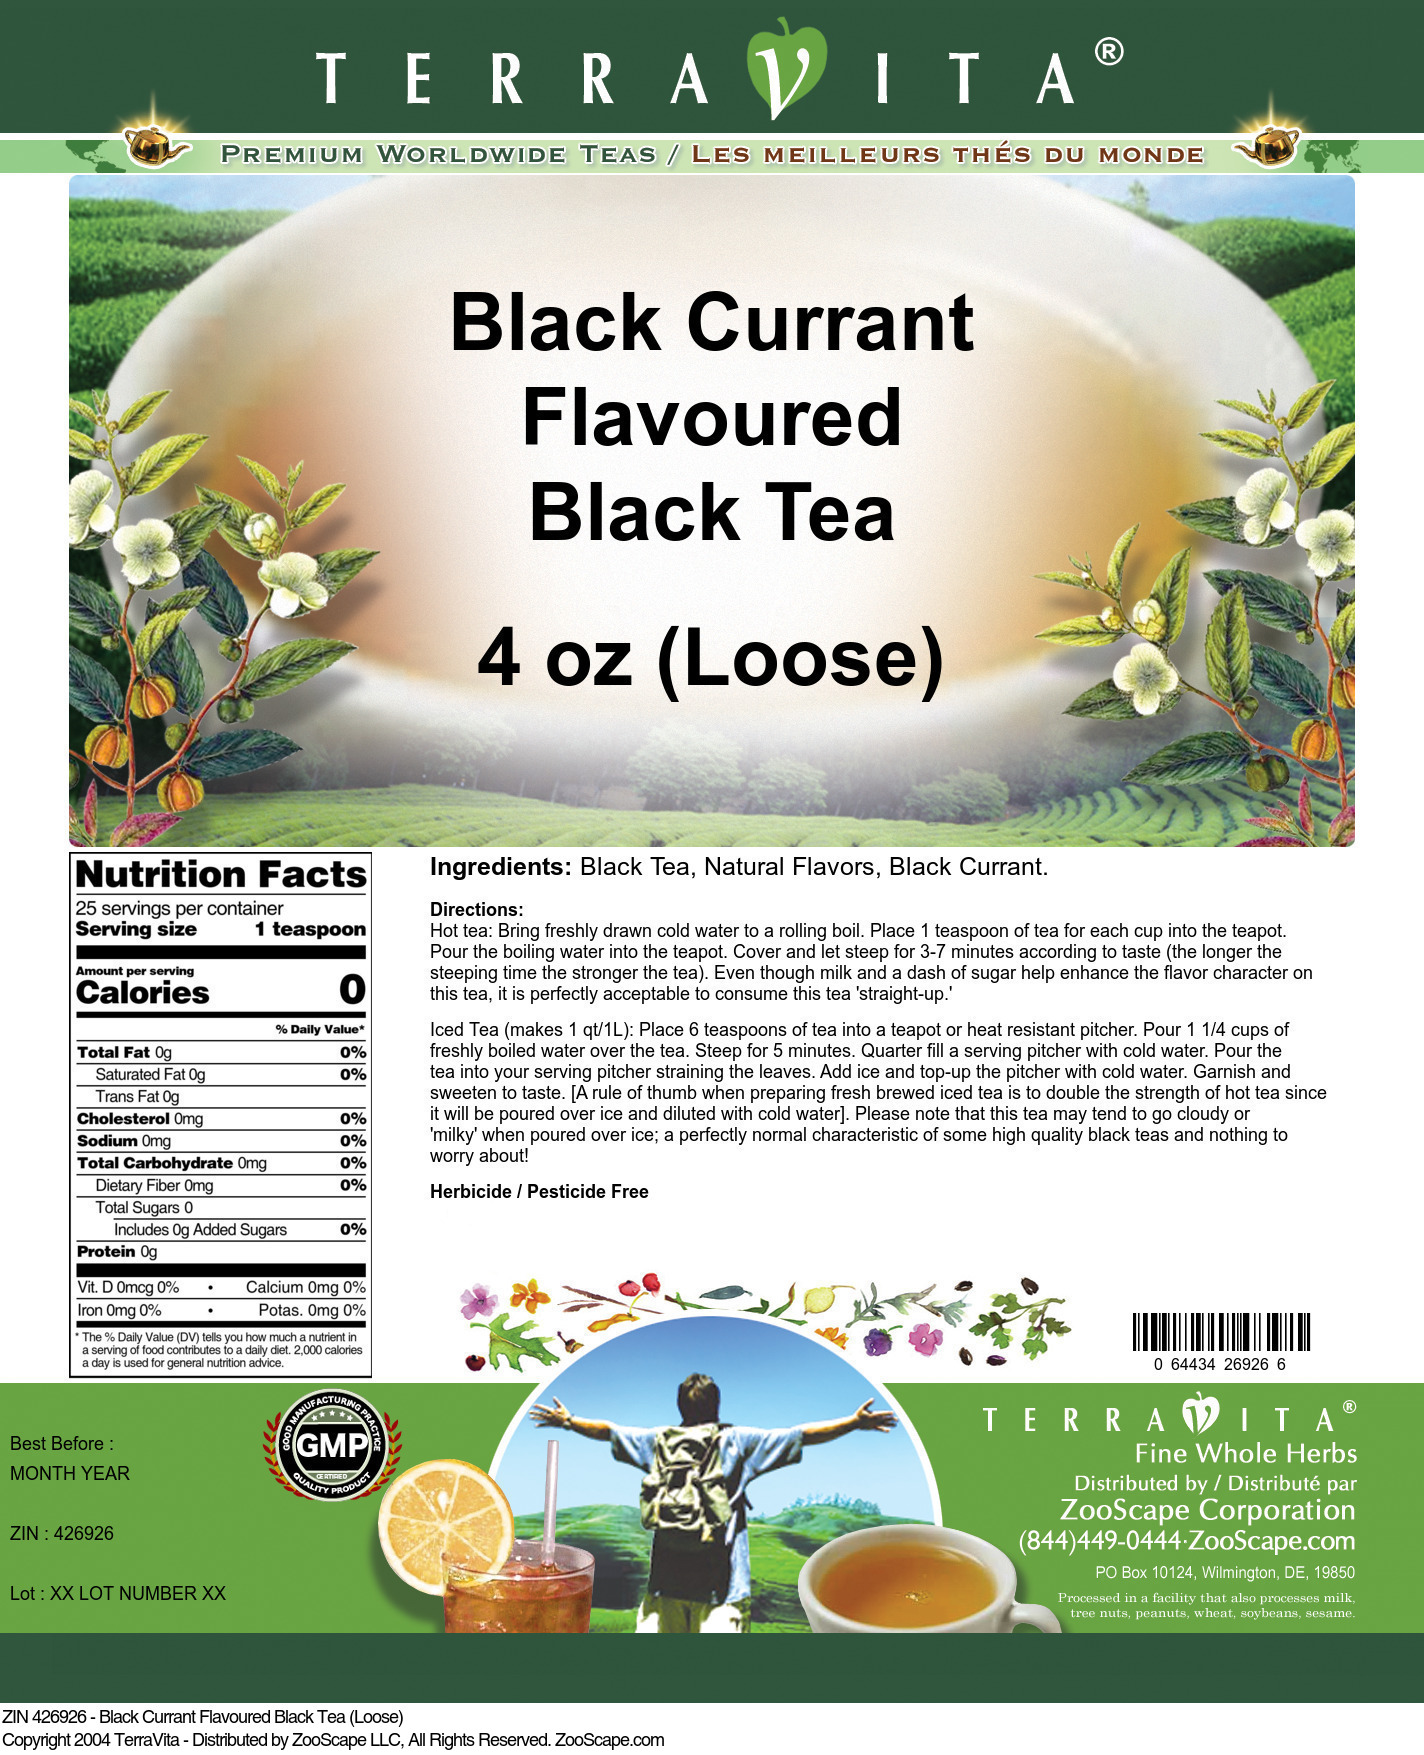 Black Currant Flavoured Black Tea (Loose) - Label